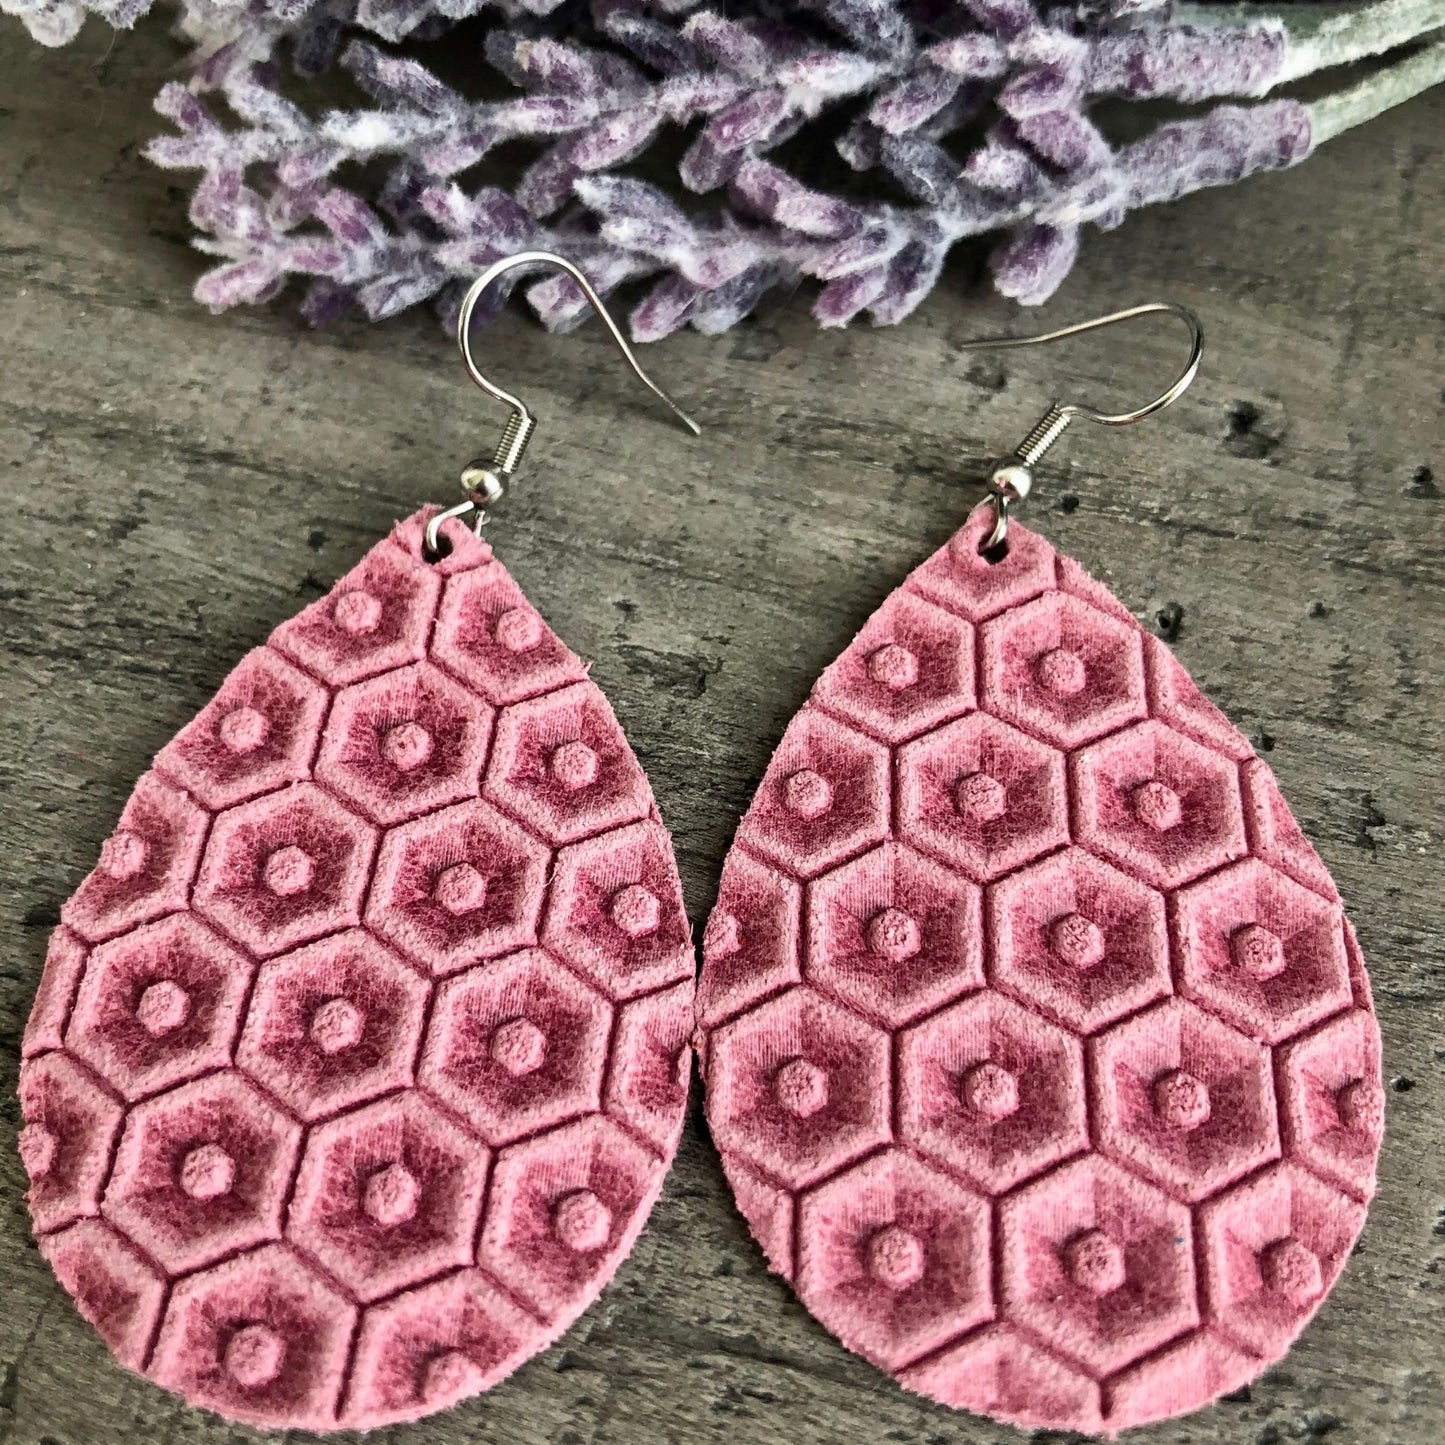 The Blush Honeycomb Earrings